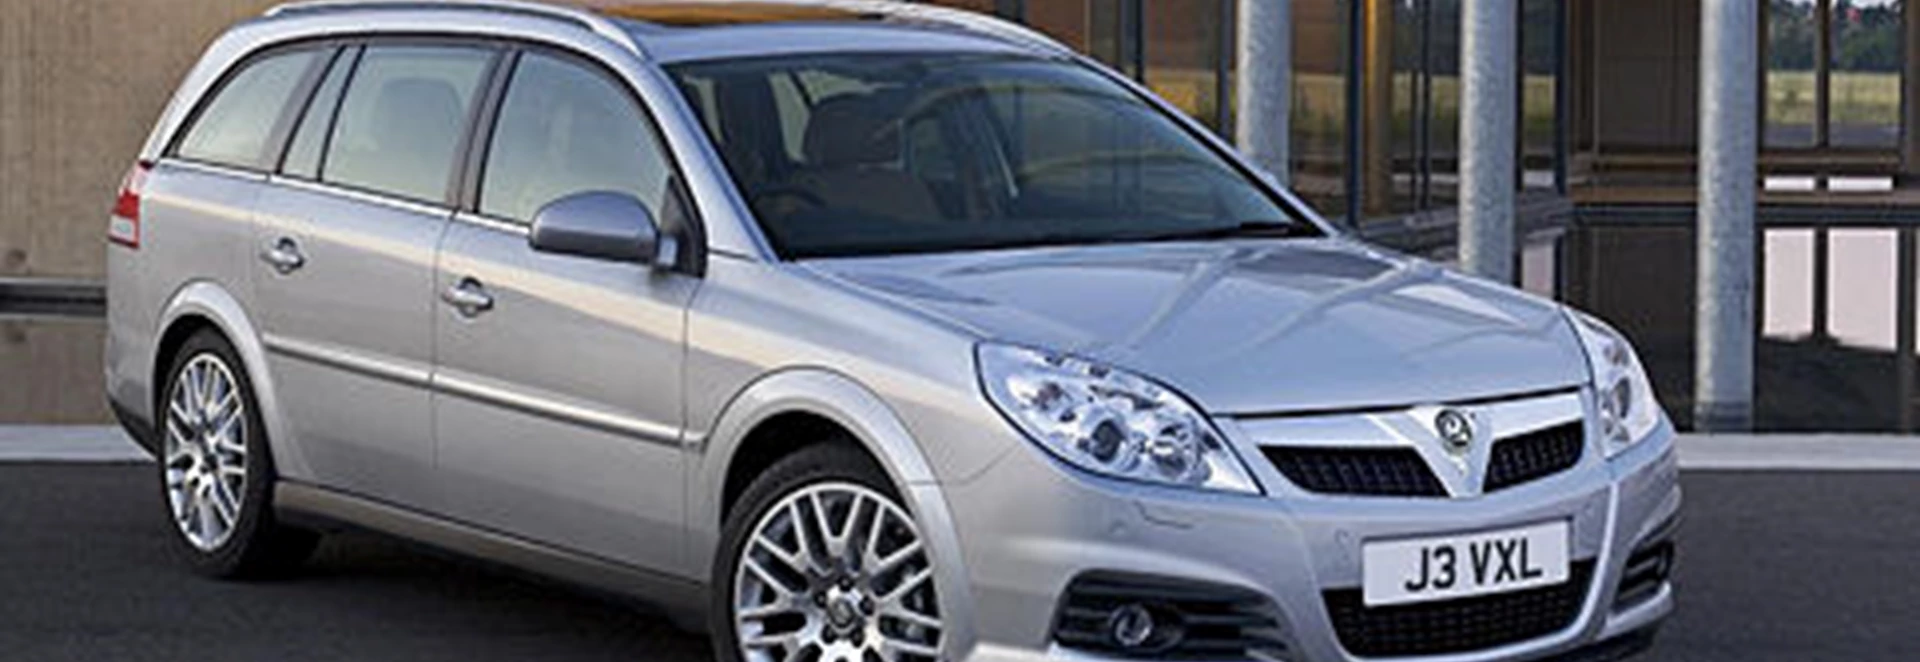 Vauxhall Vectra 1.9 CDTi 150 SRi Estate (2005) 